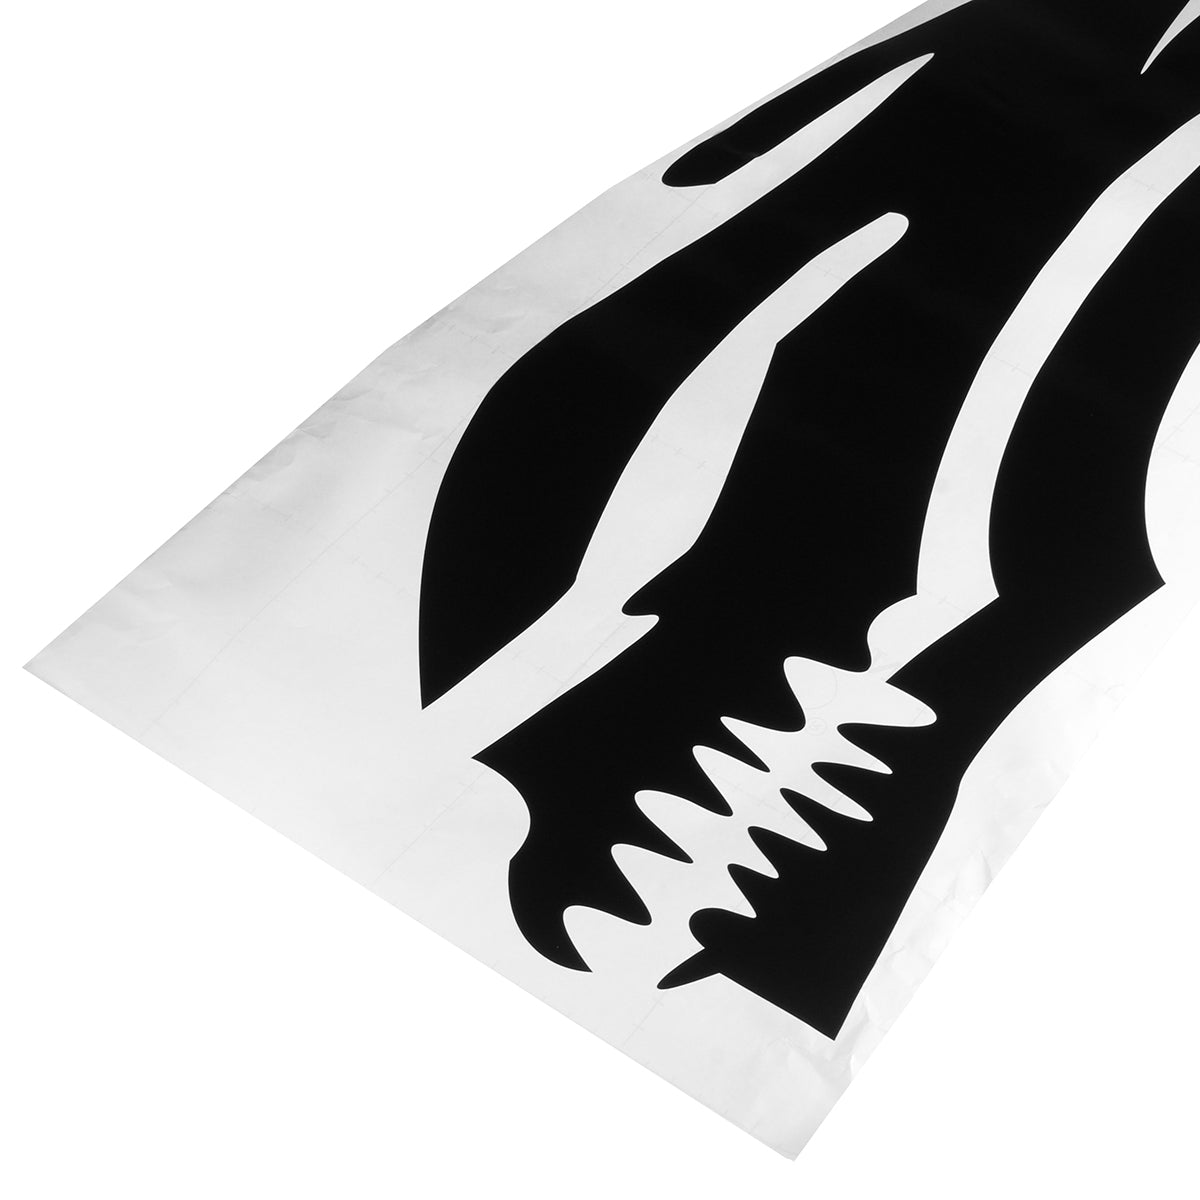 Black 2x 150x30cm Car SUV Skull Side Skirt Body Doors Vinyl Graphic Decals Stickers